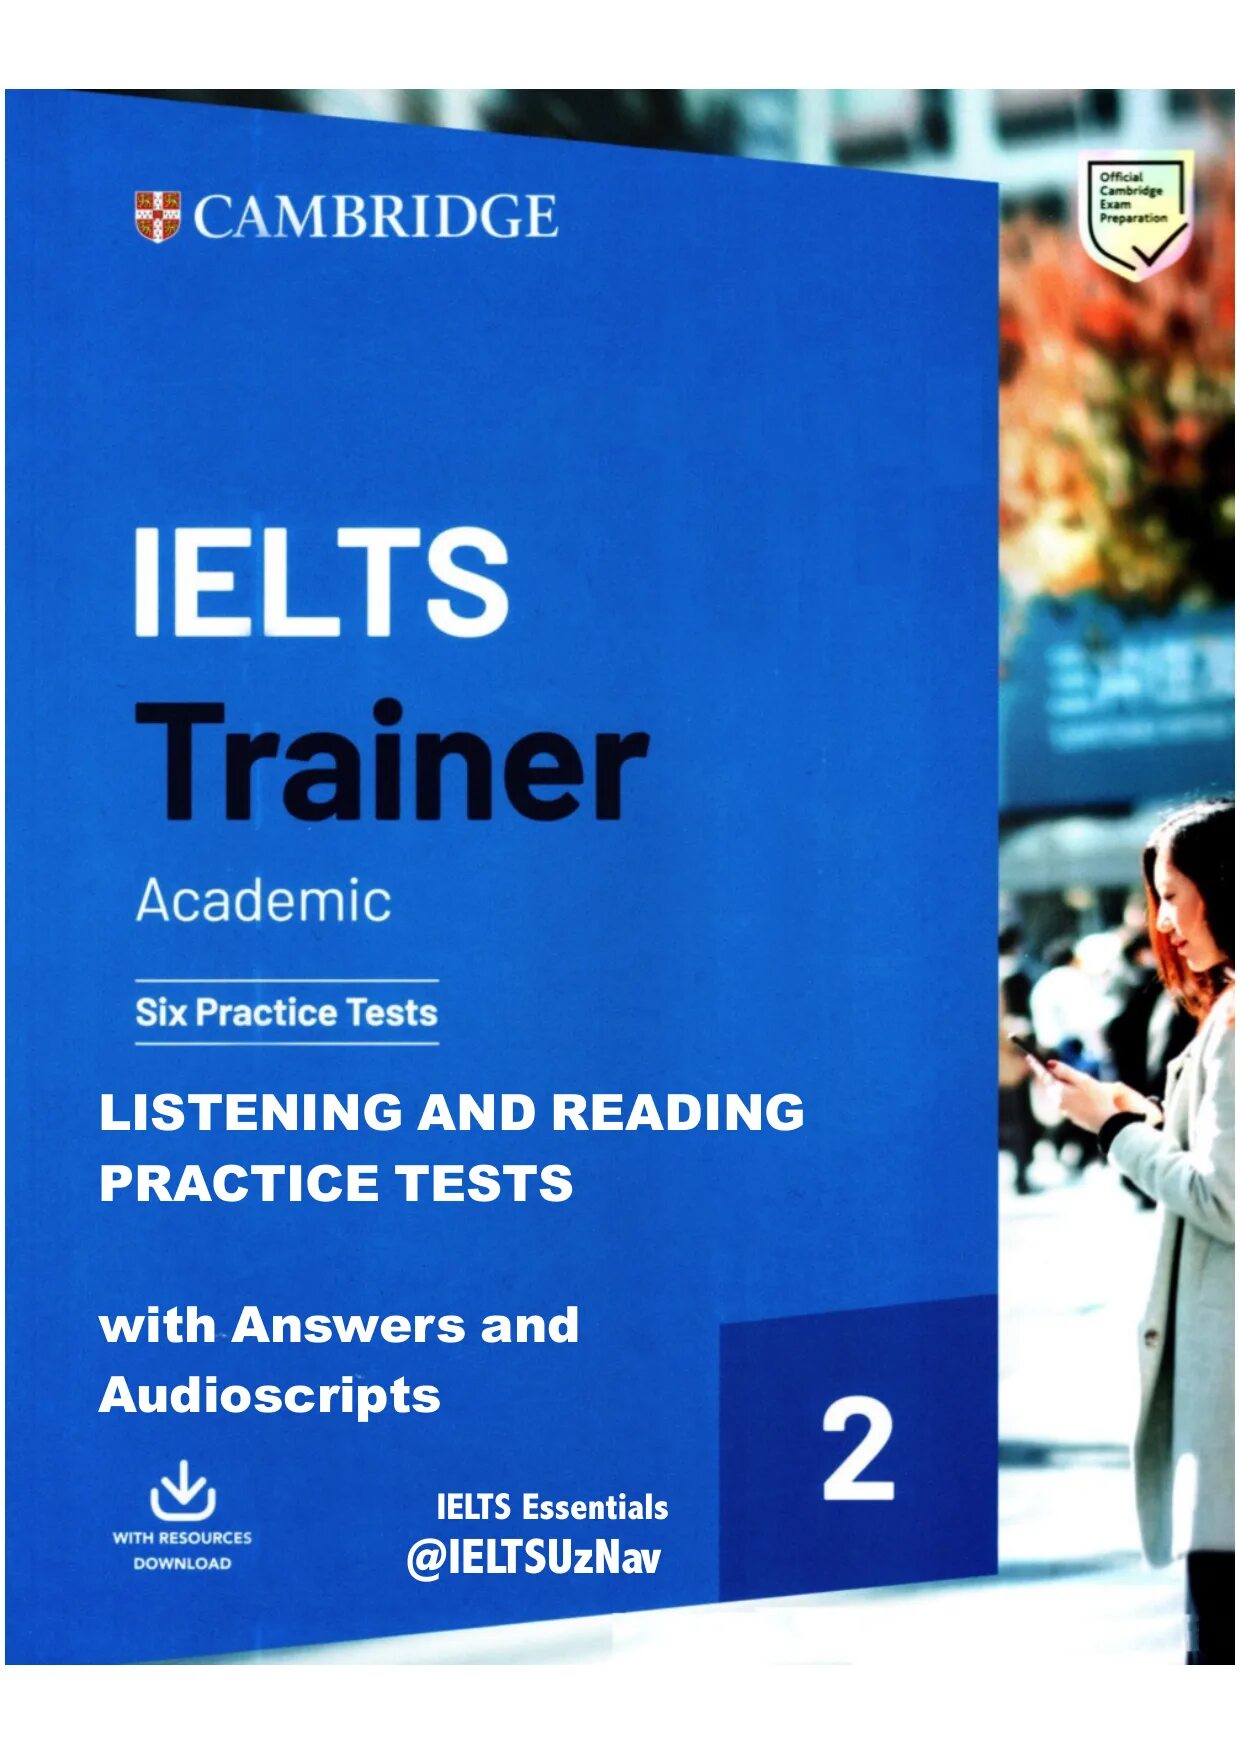 IELTS Trainer 2 Academic Six Practice Tests. Cambridge IELTS Practice Tests for IELTS 2. Cambridge IELTS Trainer. Учебник по английскому языку Cambridge.